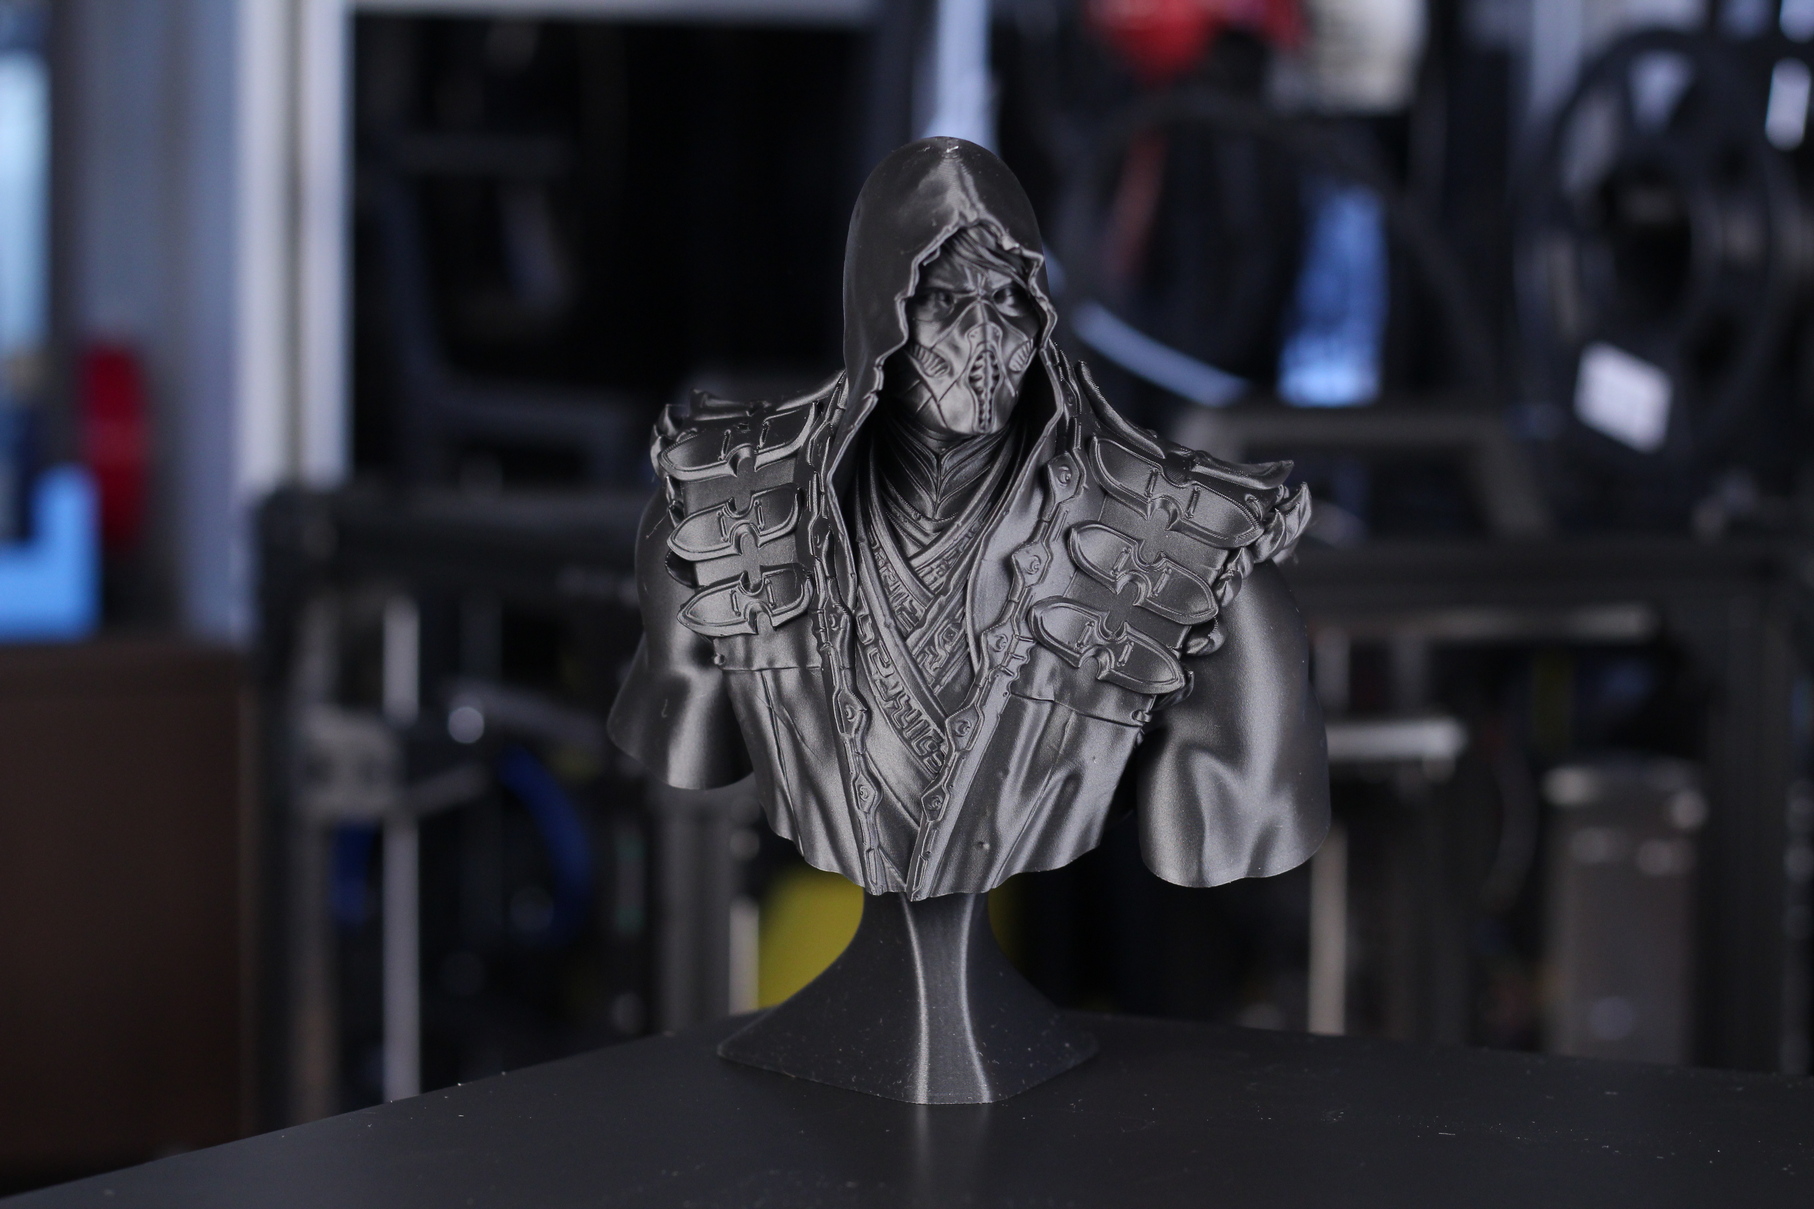 Scorpion Bust printed on the V Core 3 6 | RatRig V-Core 3 Review: Premium CoreXY 3D Printer Kit